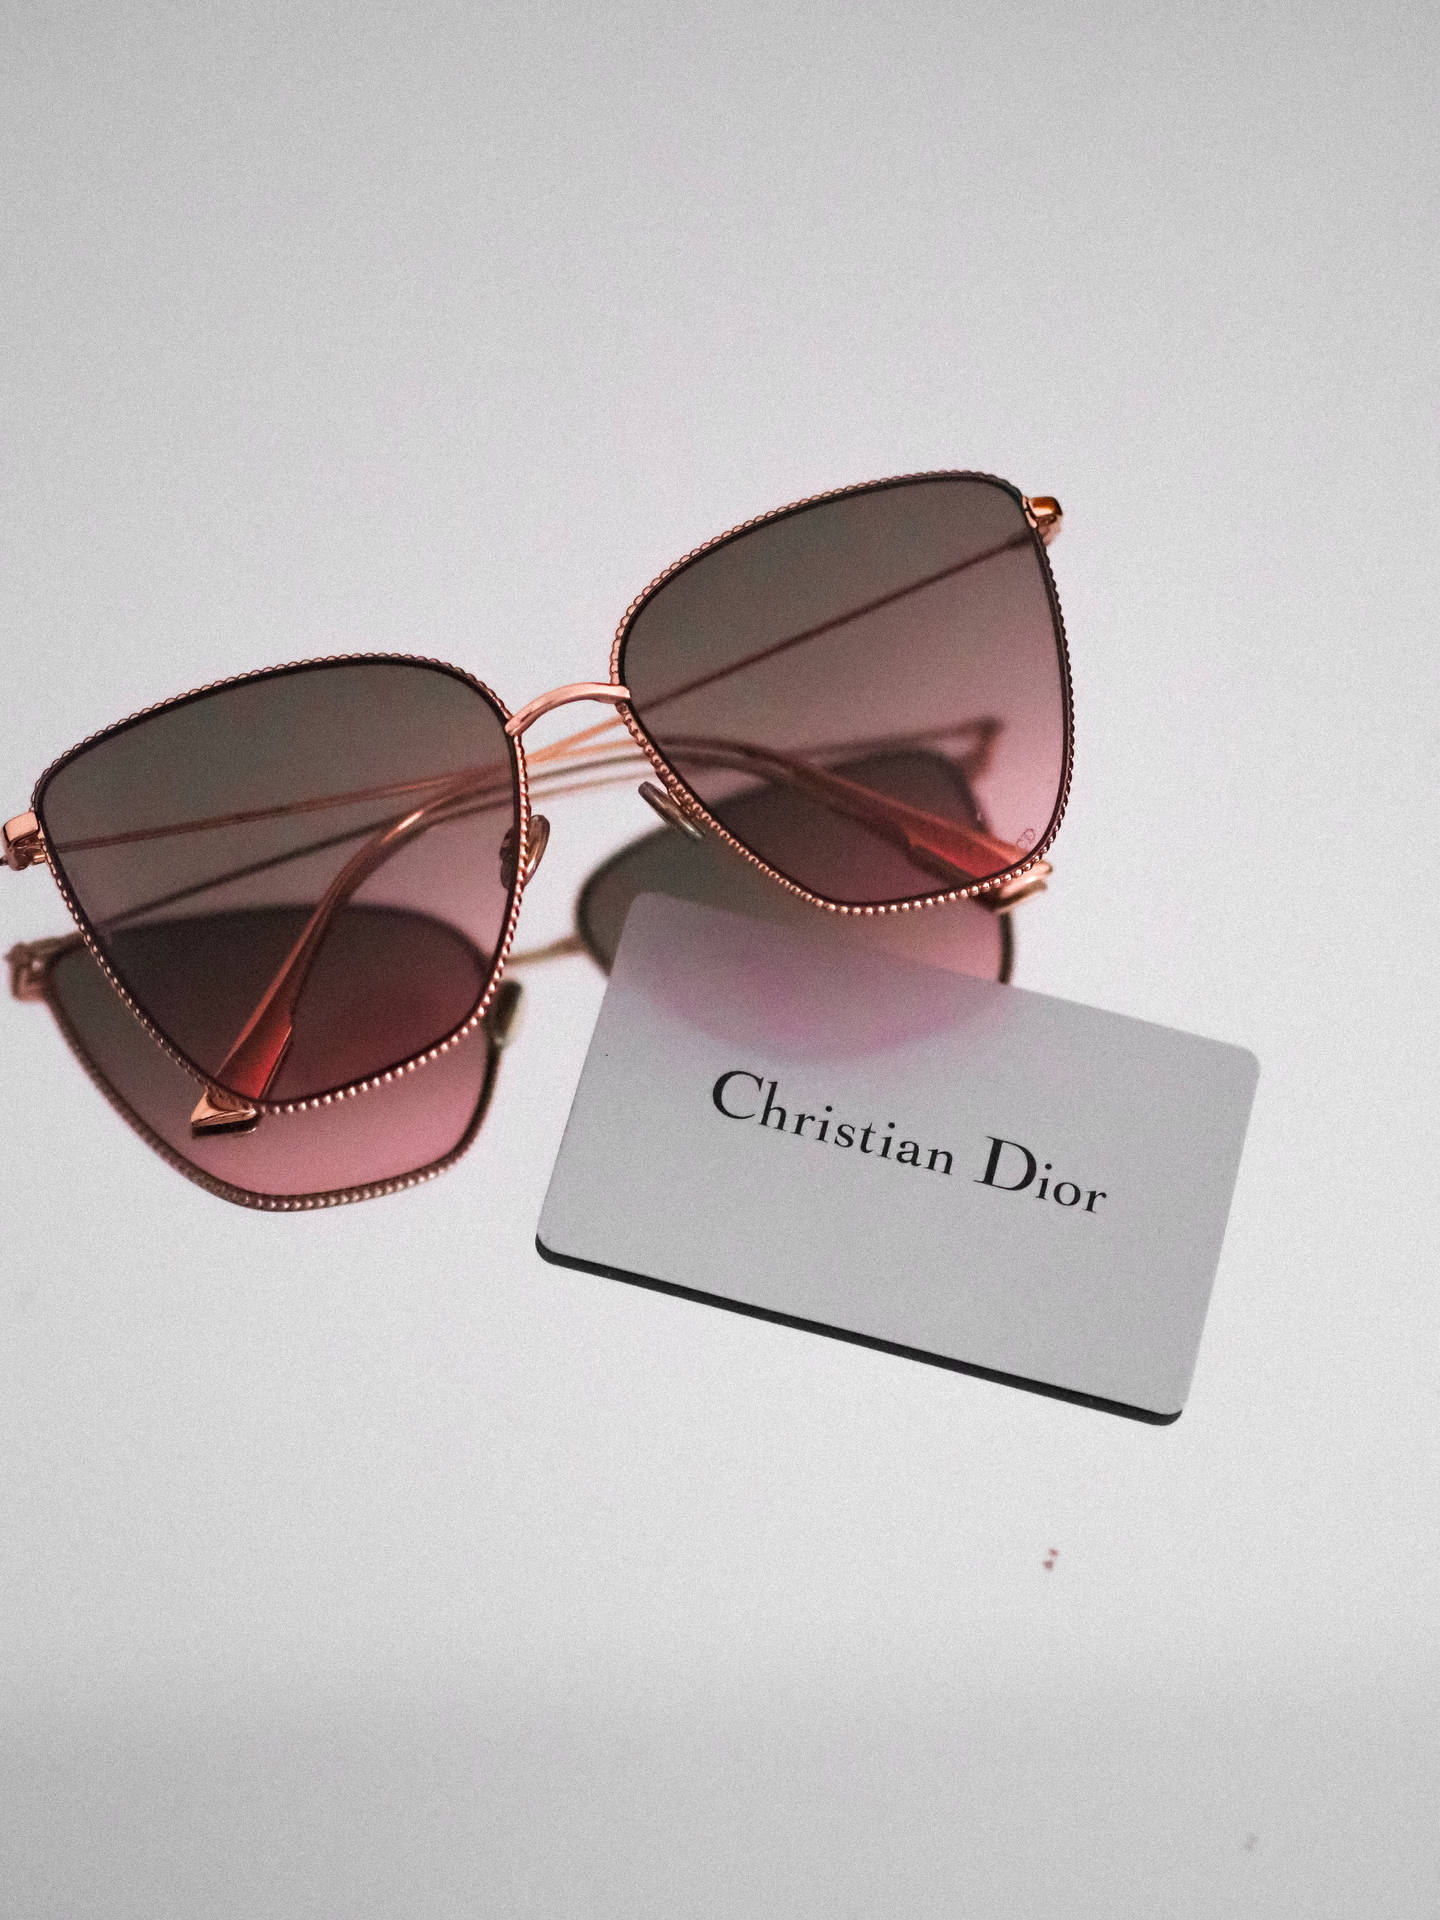 Christian Dior Sunglasses Wallpaper